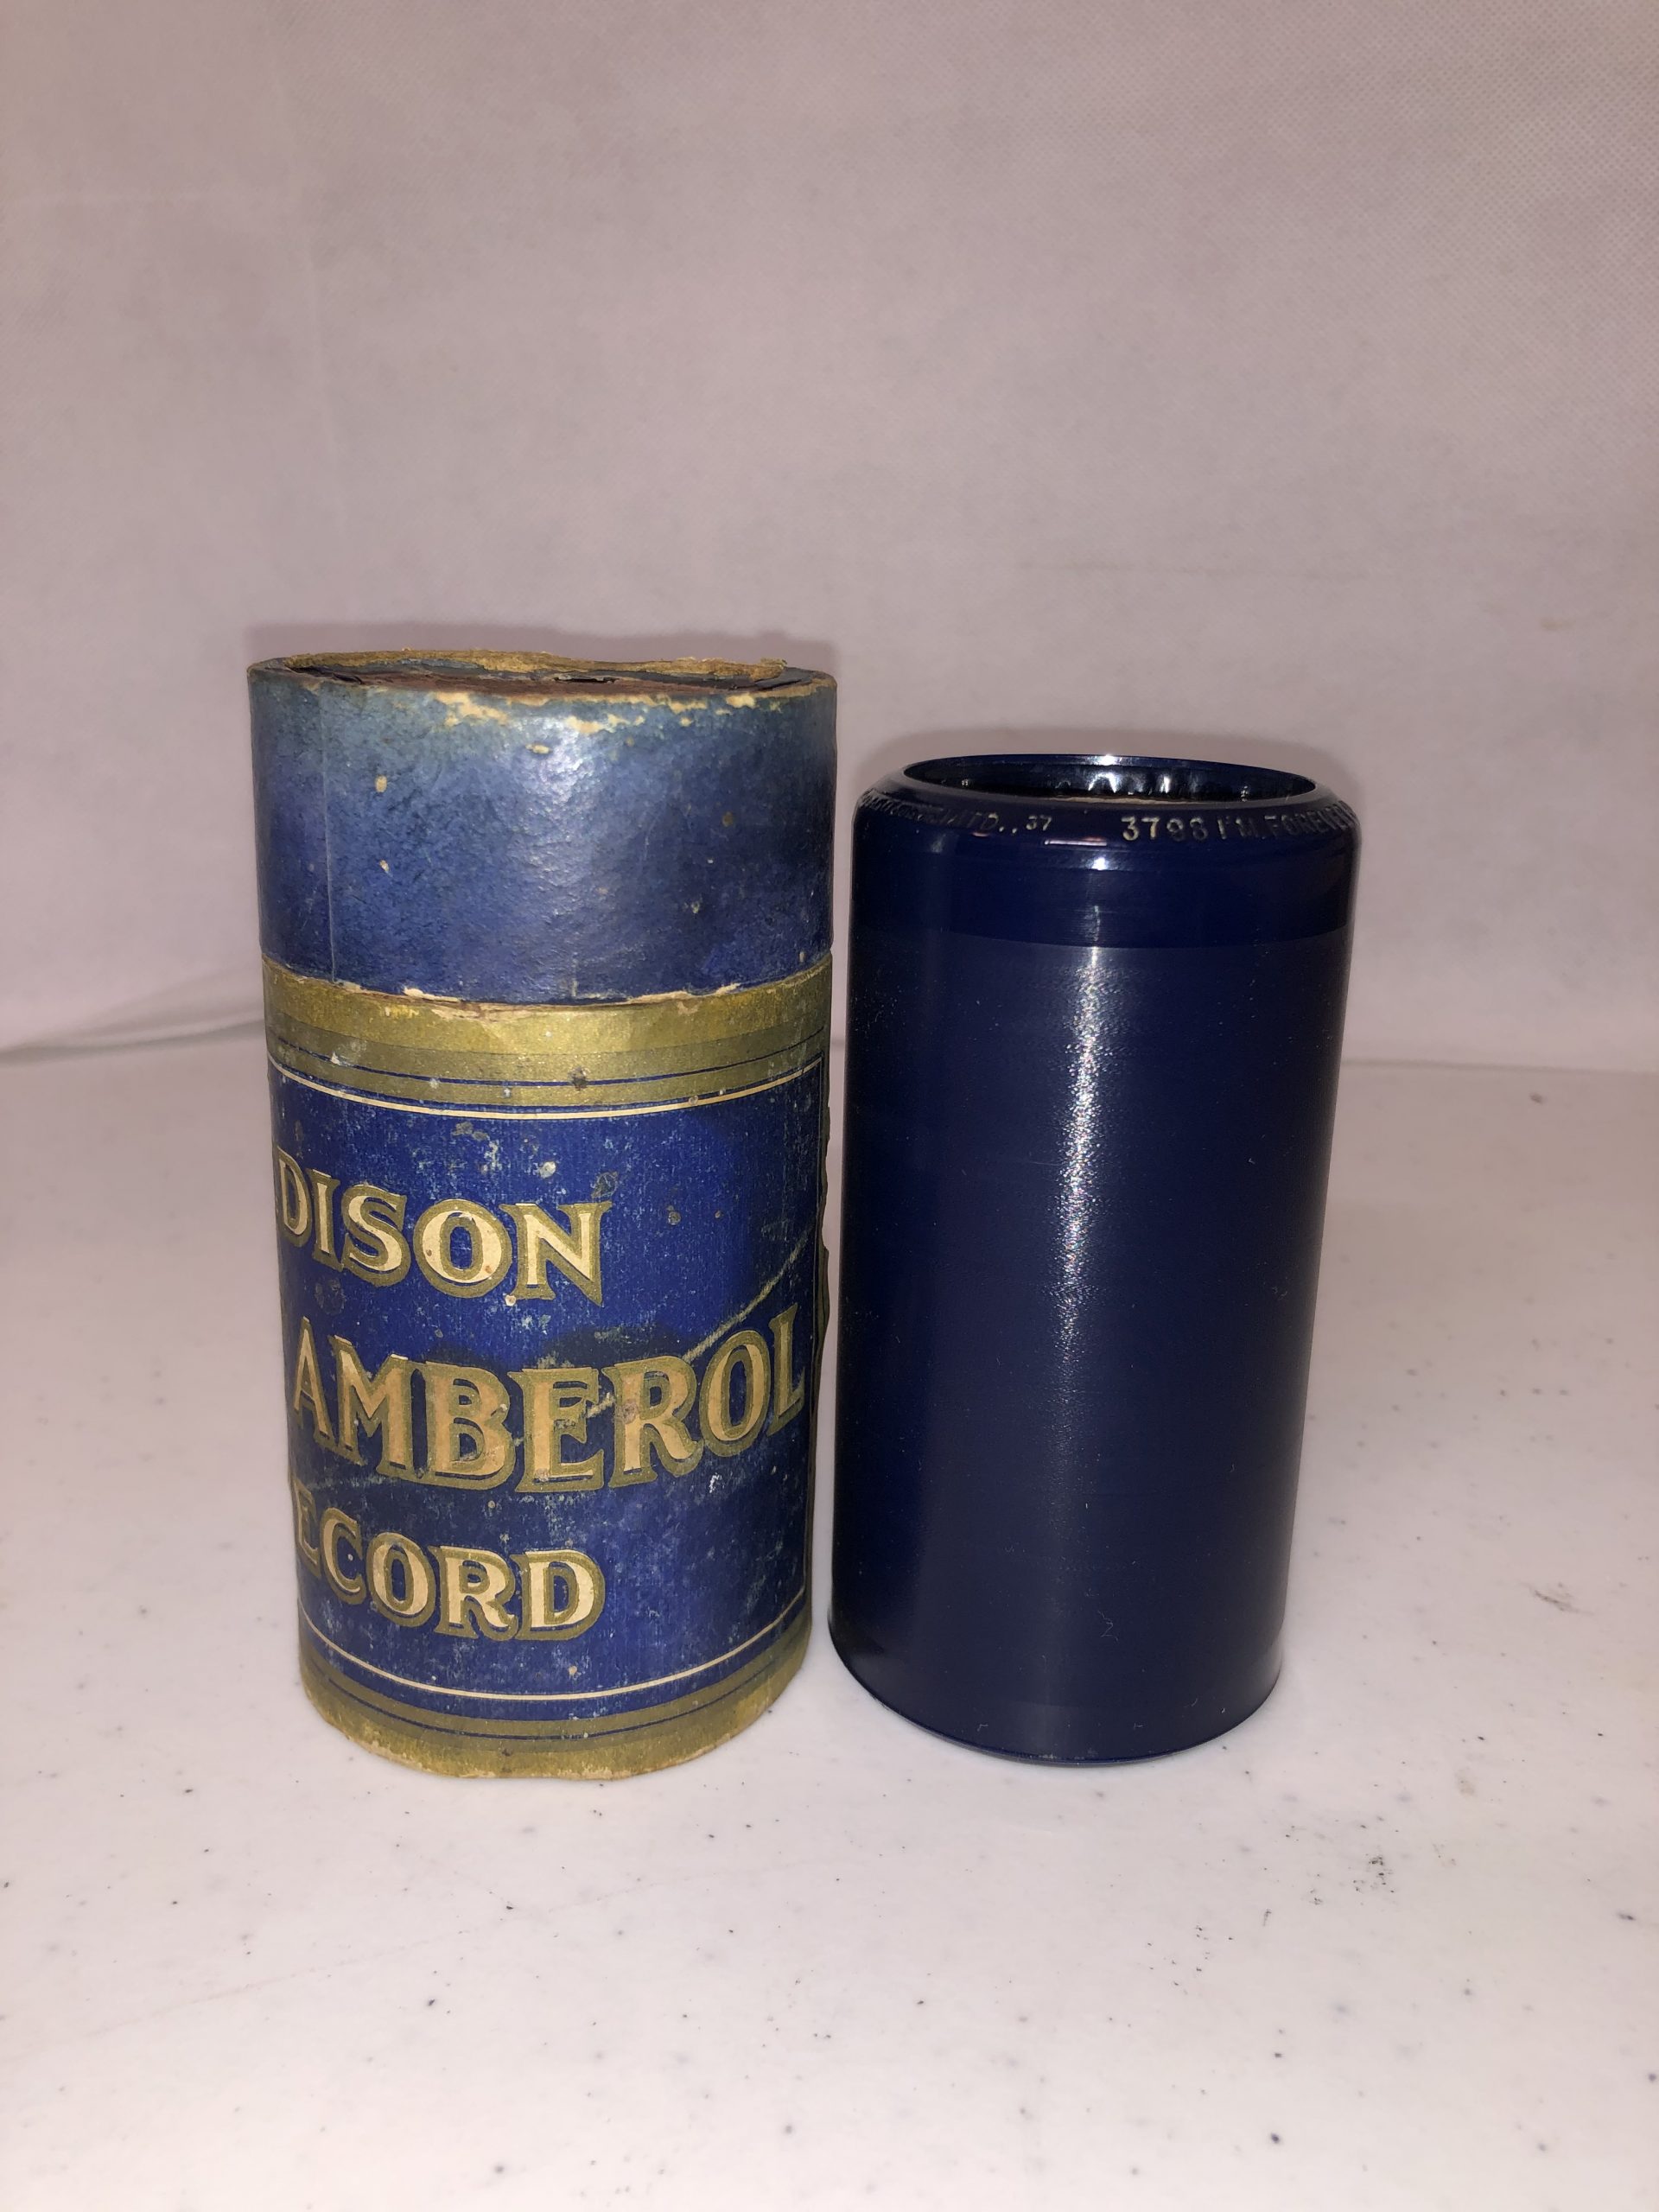 Edison 4 minute Cylinder…”Sipping Cider thru a Straw”